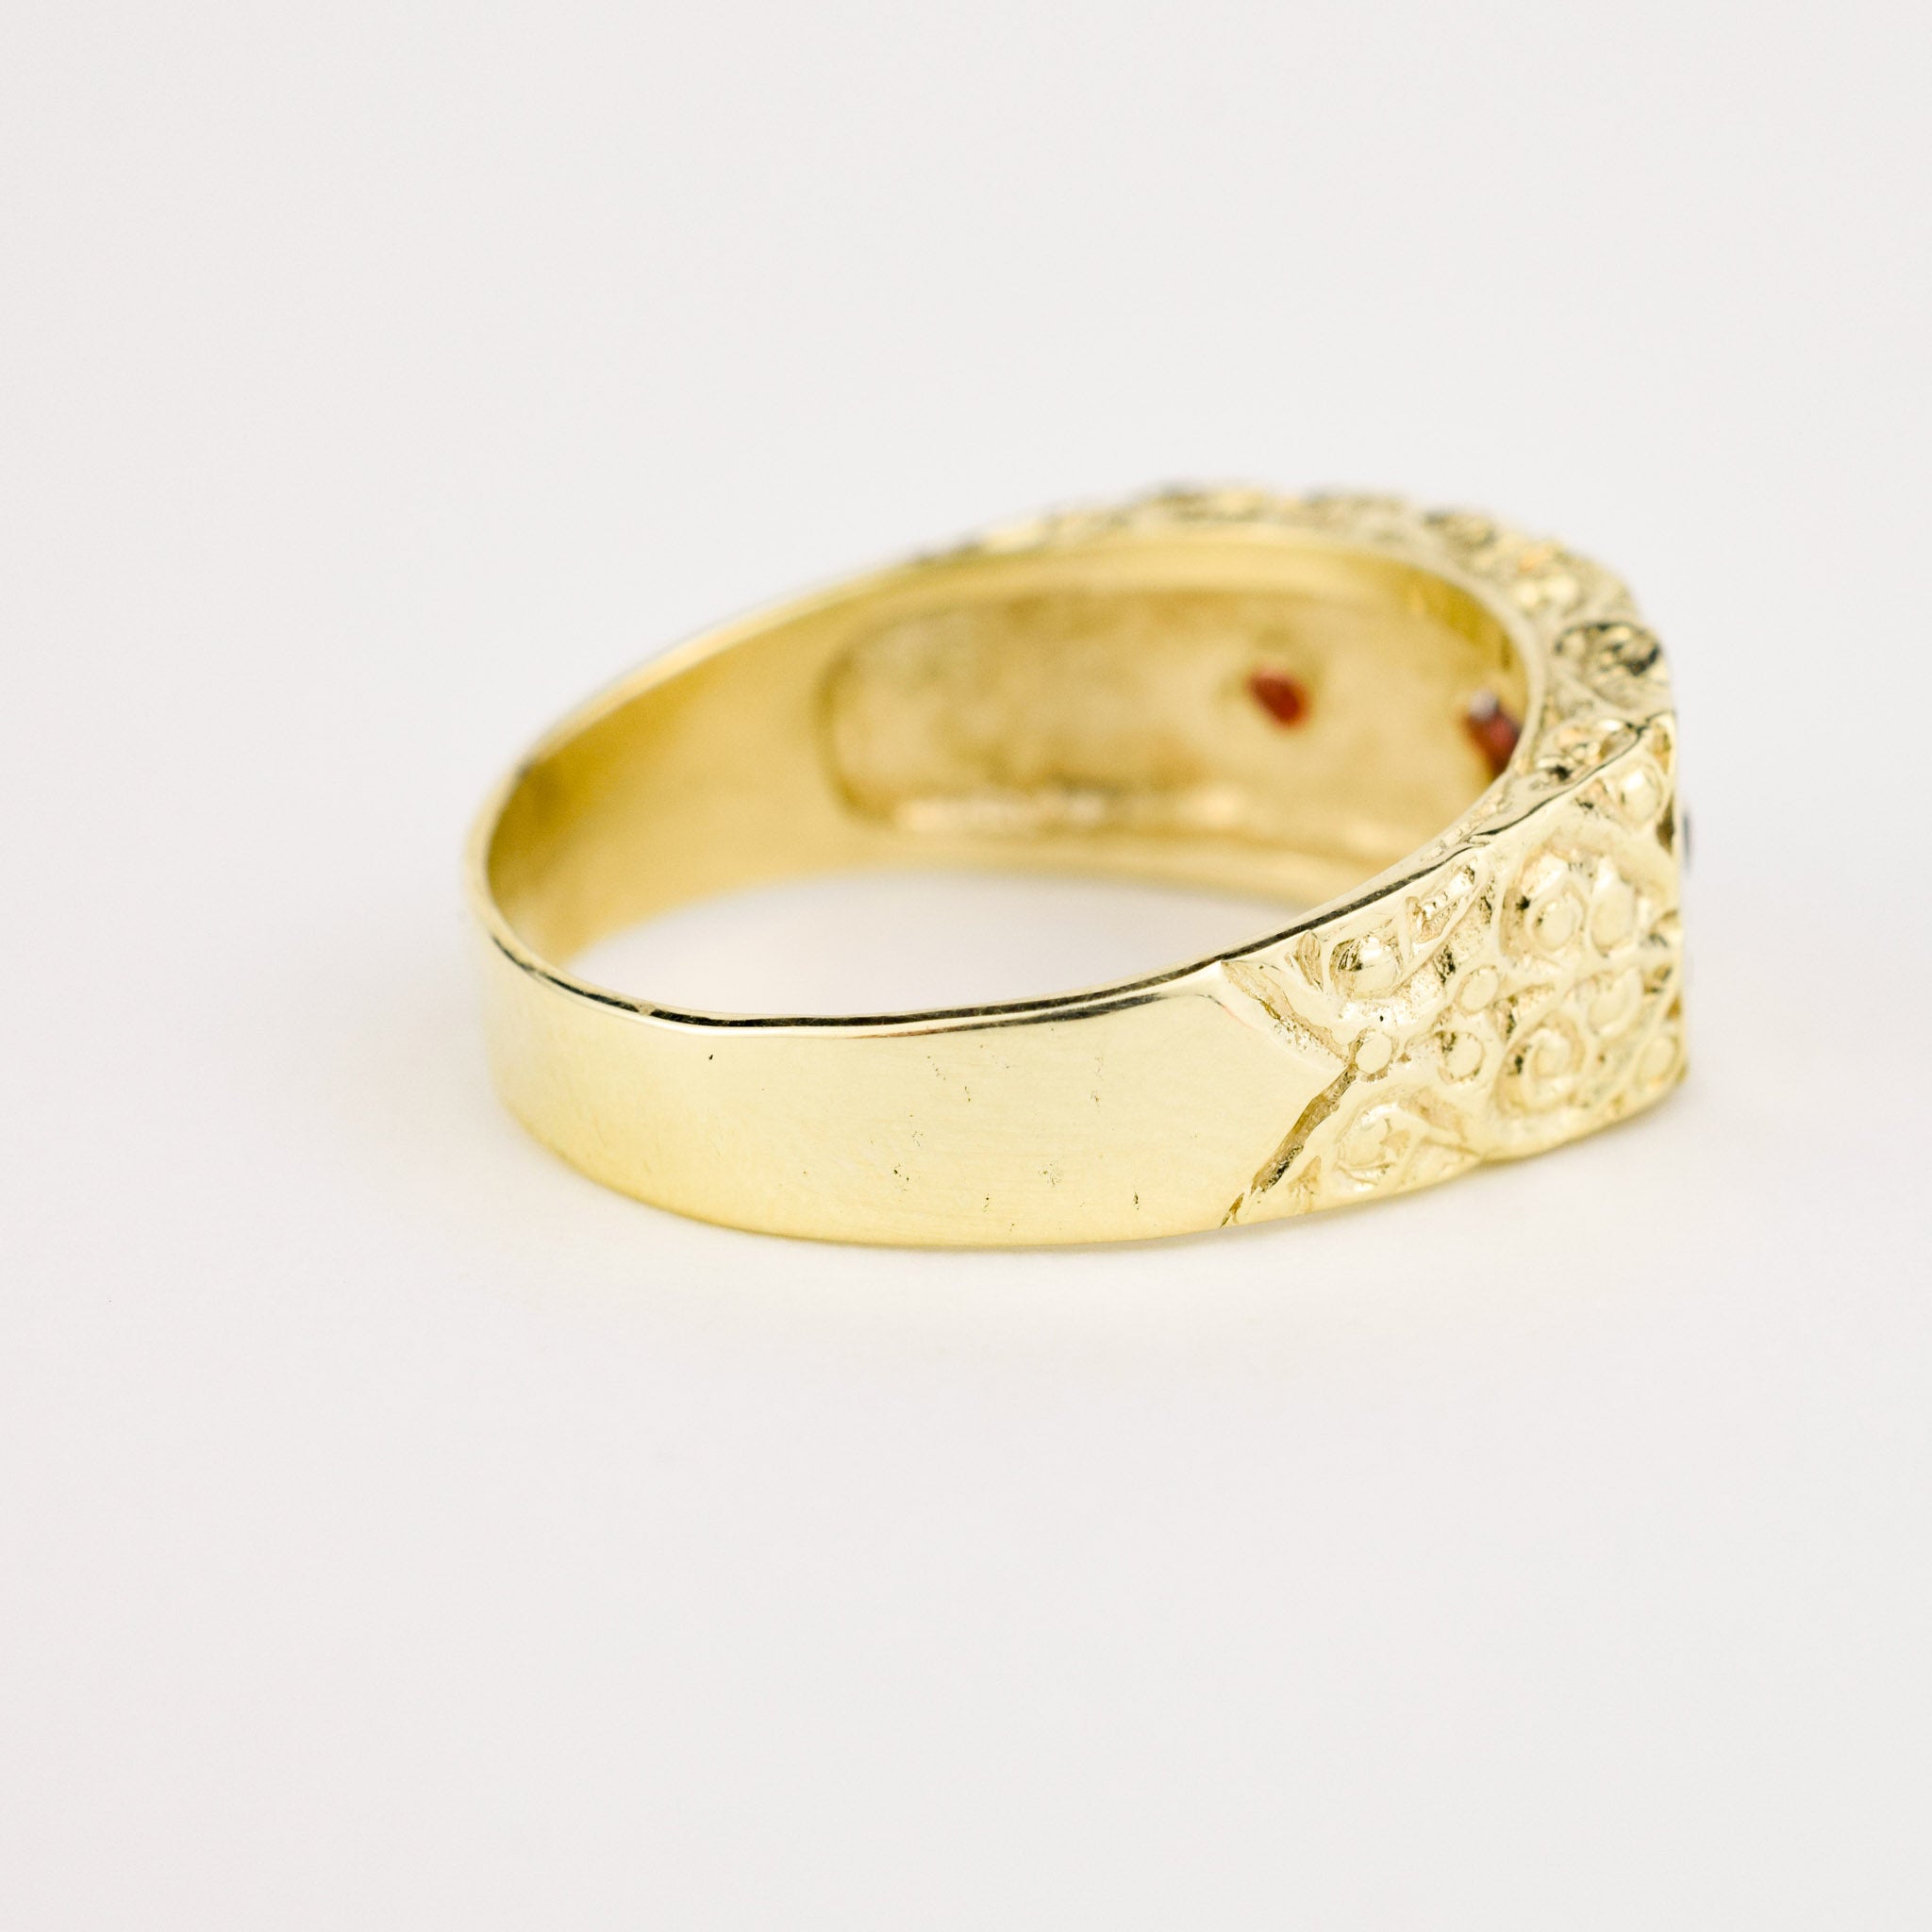 vintage gold garnet trilogy ring assayed in Birmingham in 70's